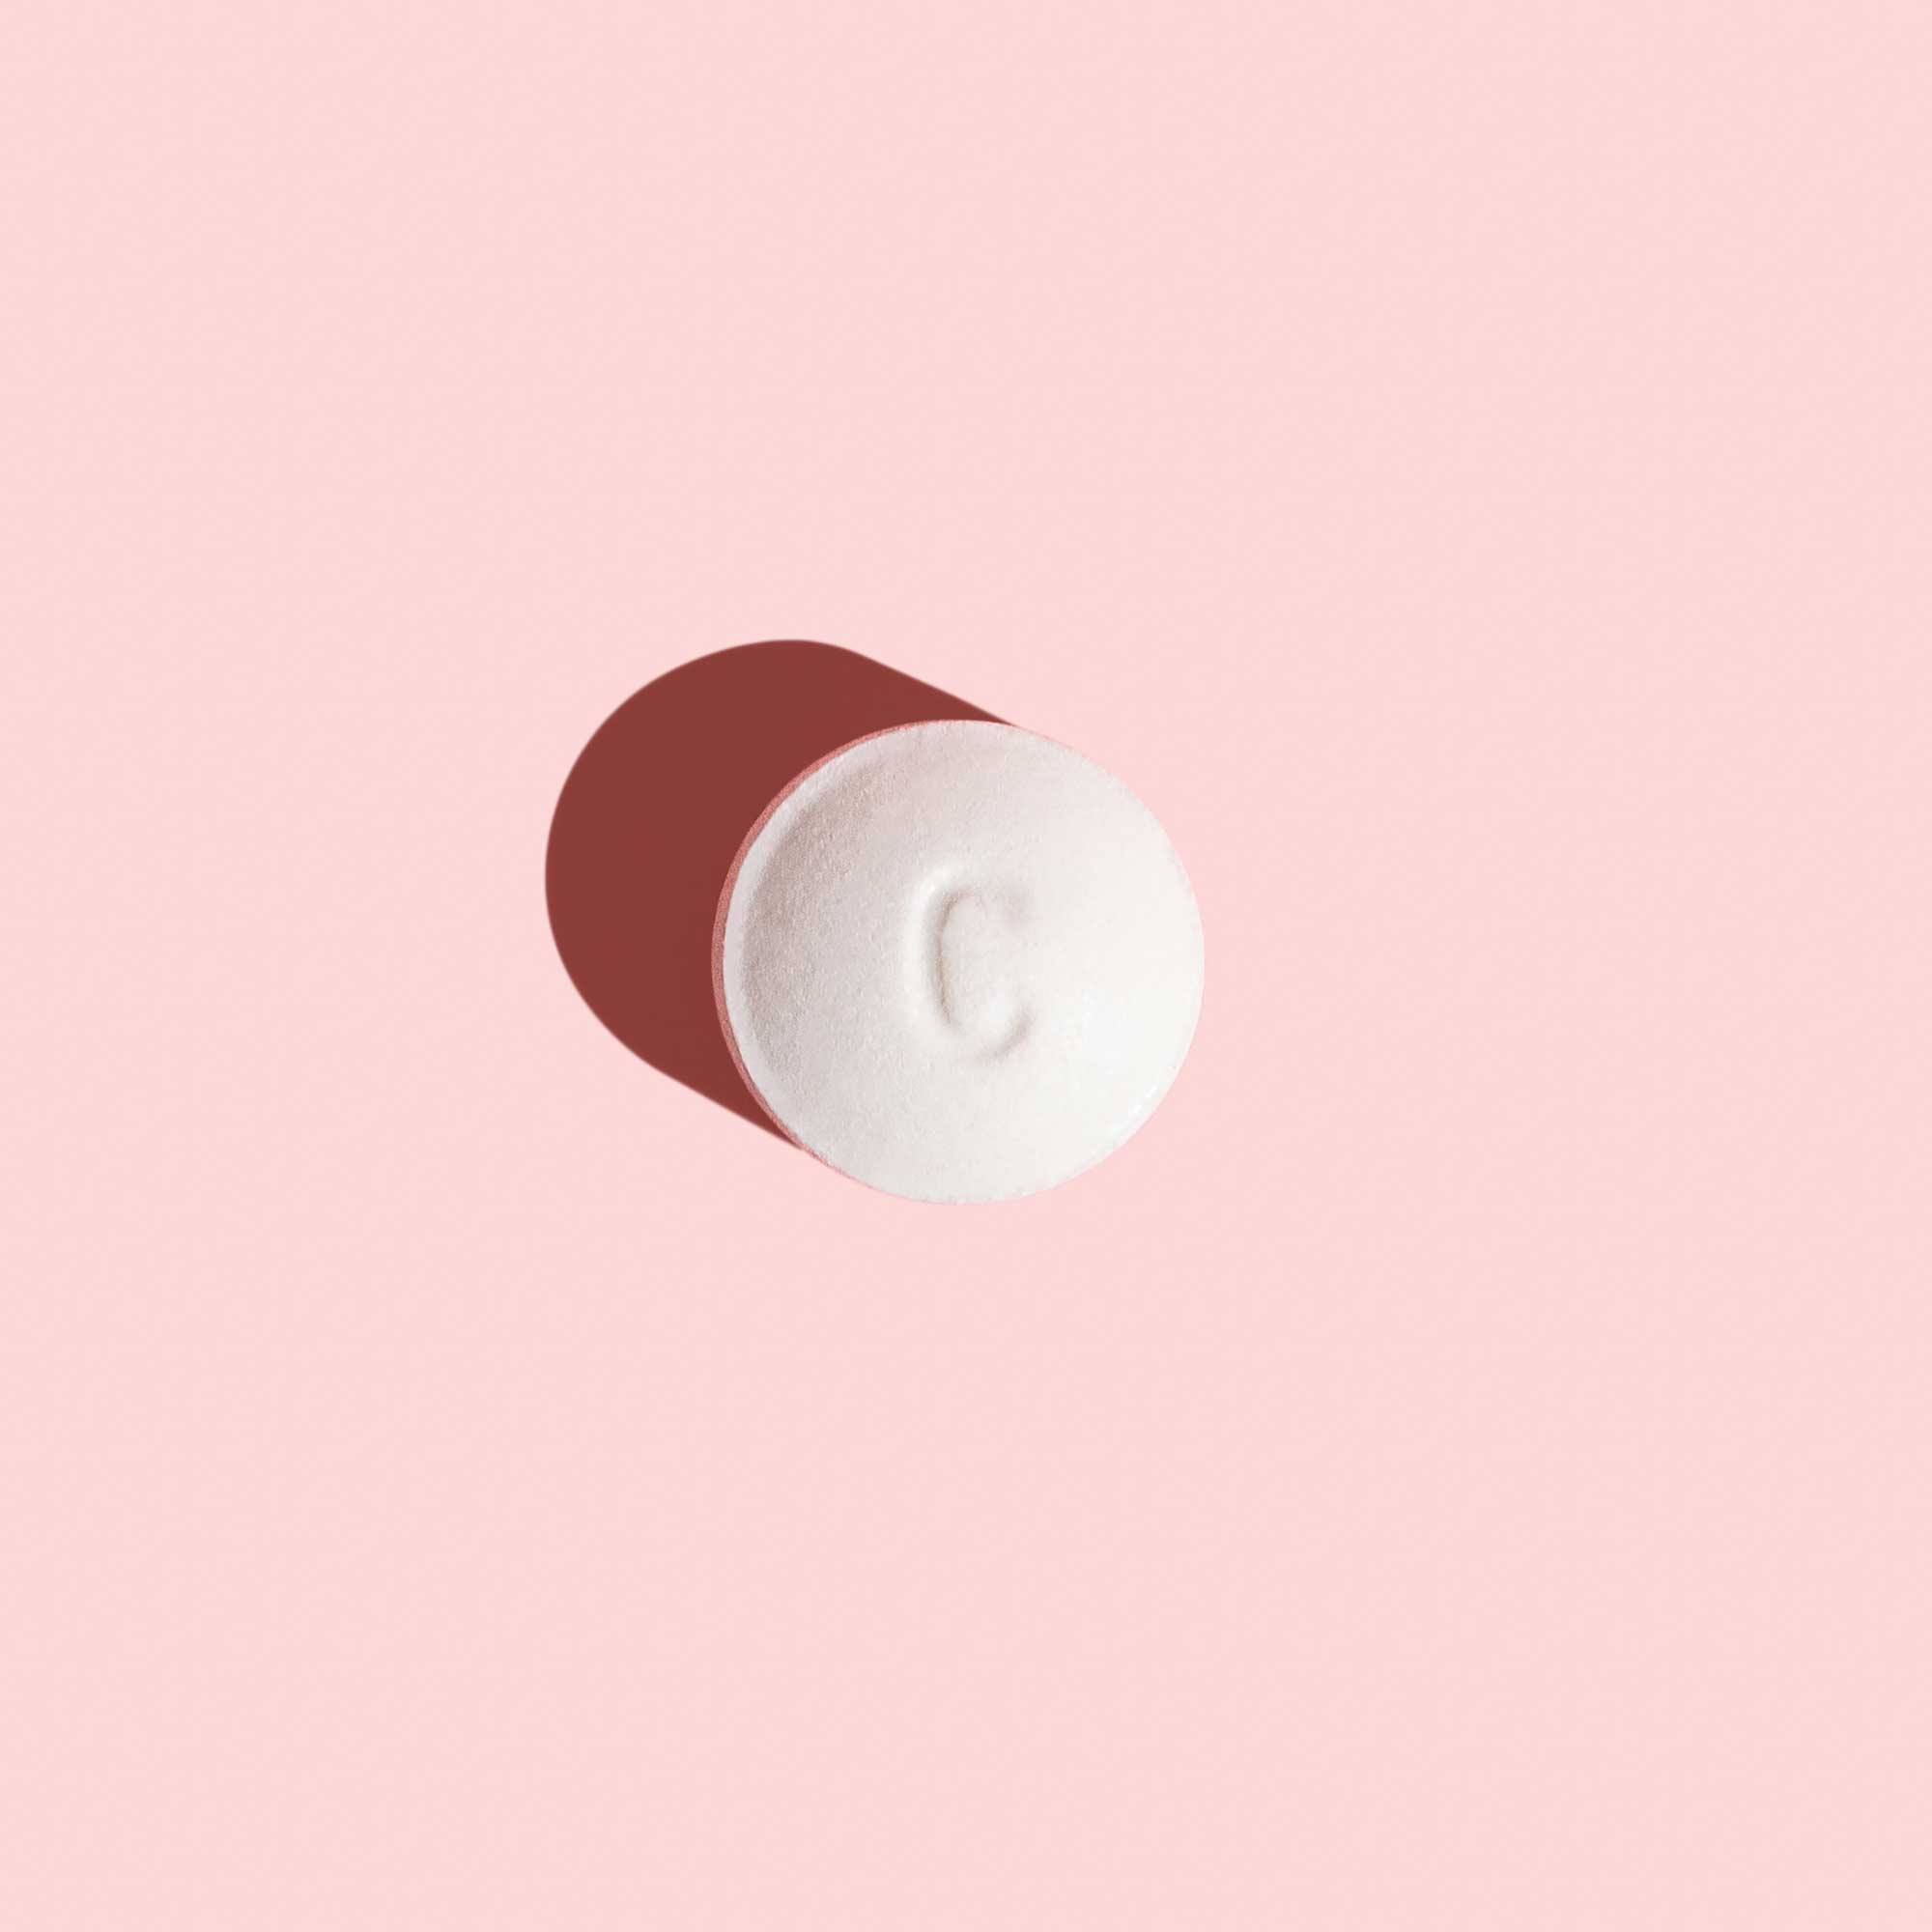 A Plan B pill on a pink surface